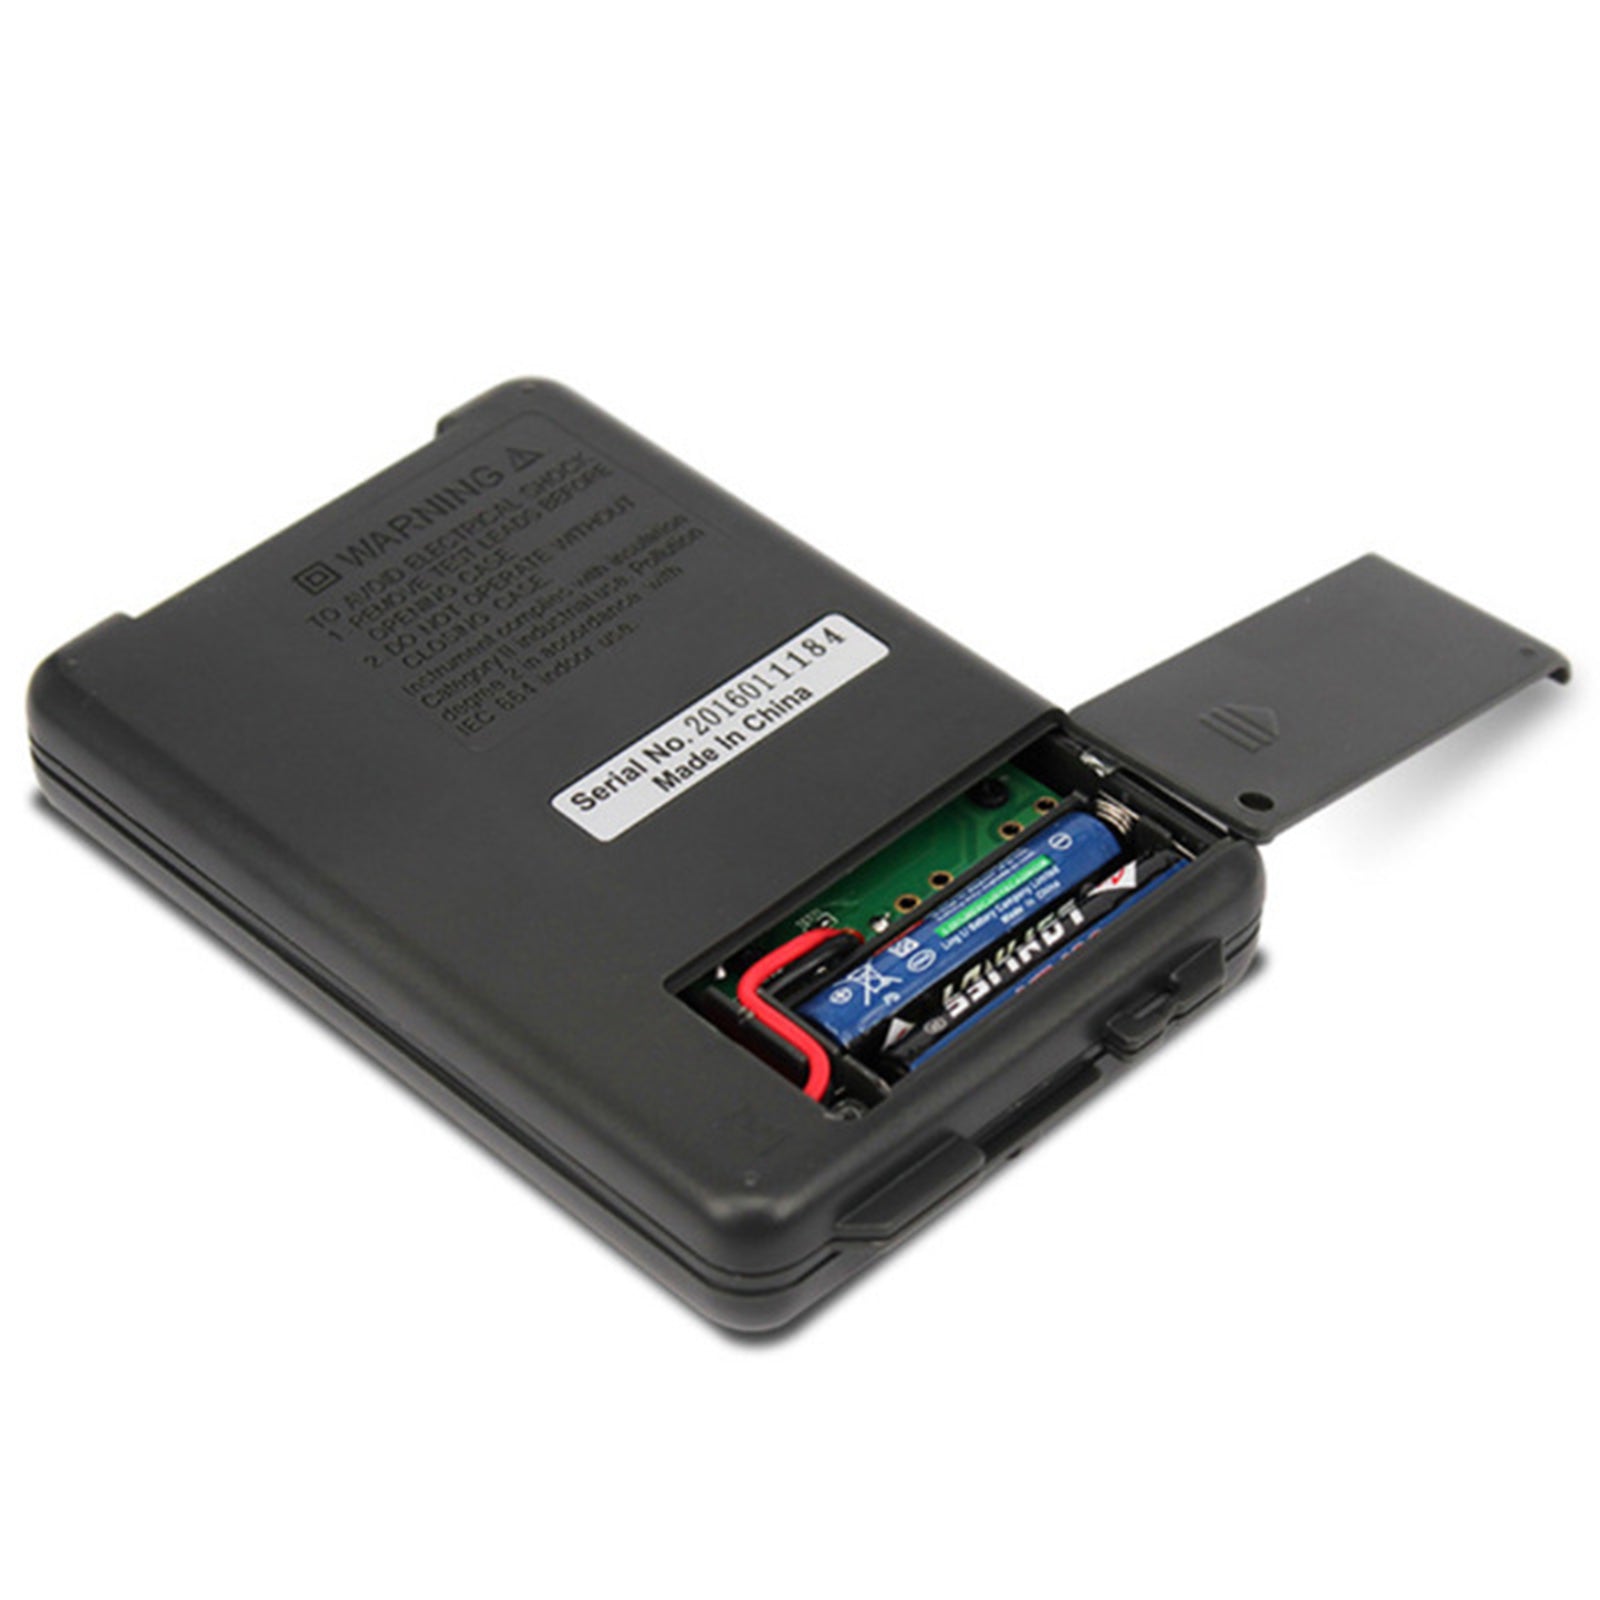 Multímetro de frecuencia digital incorporado de bolsillo portátil VC921